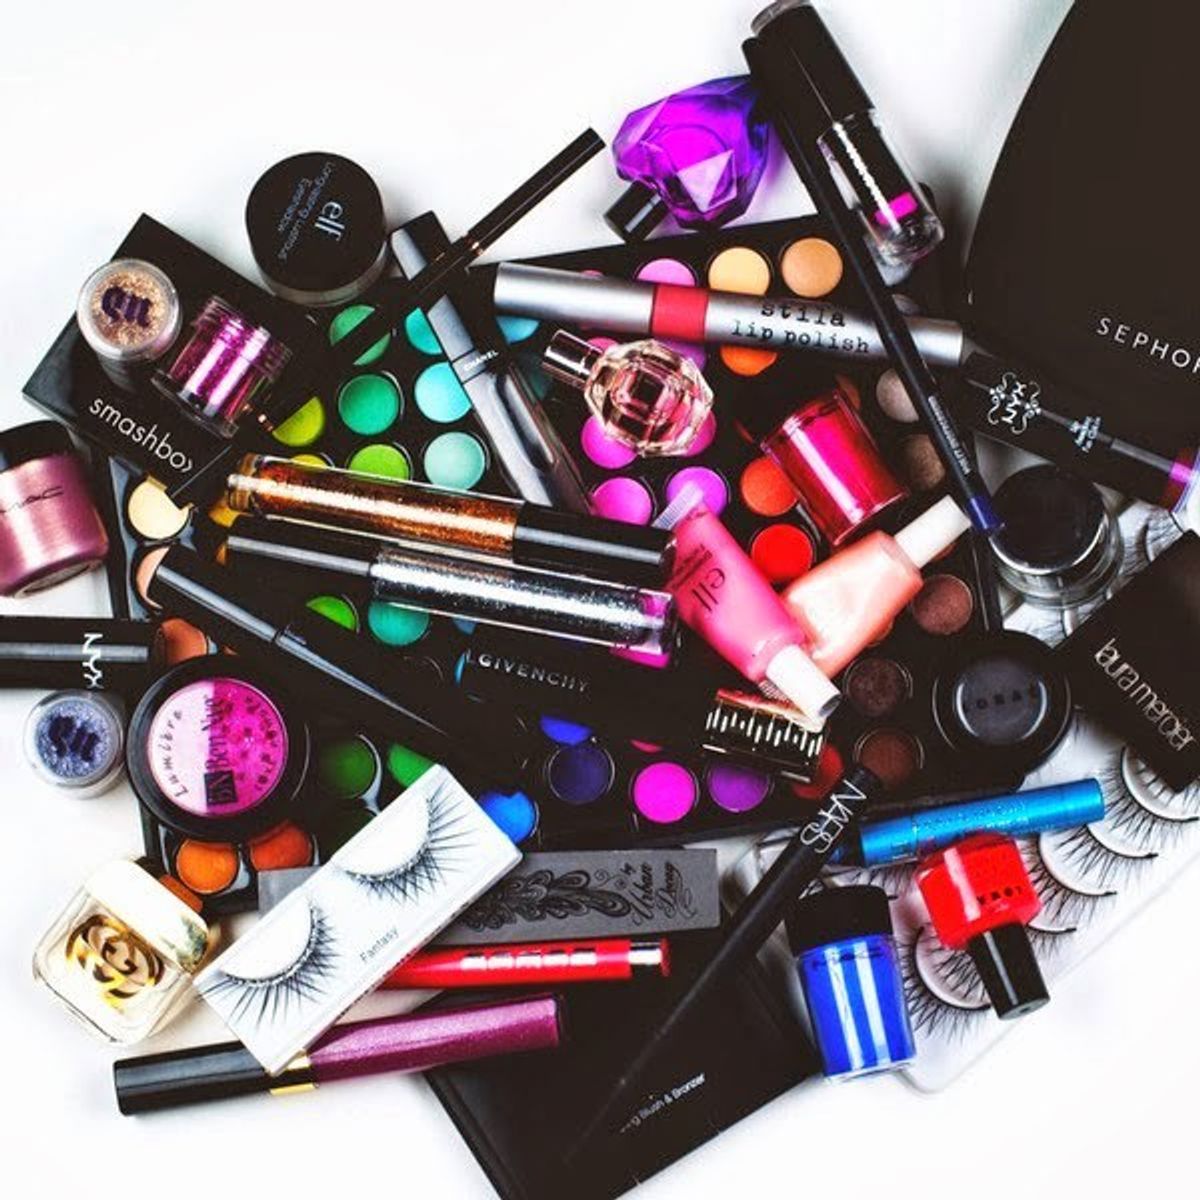 14 Drugstore Makeup Must-Haves